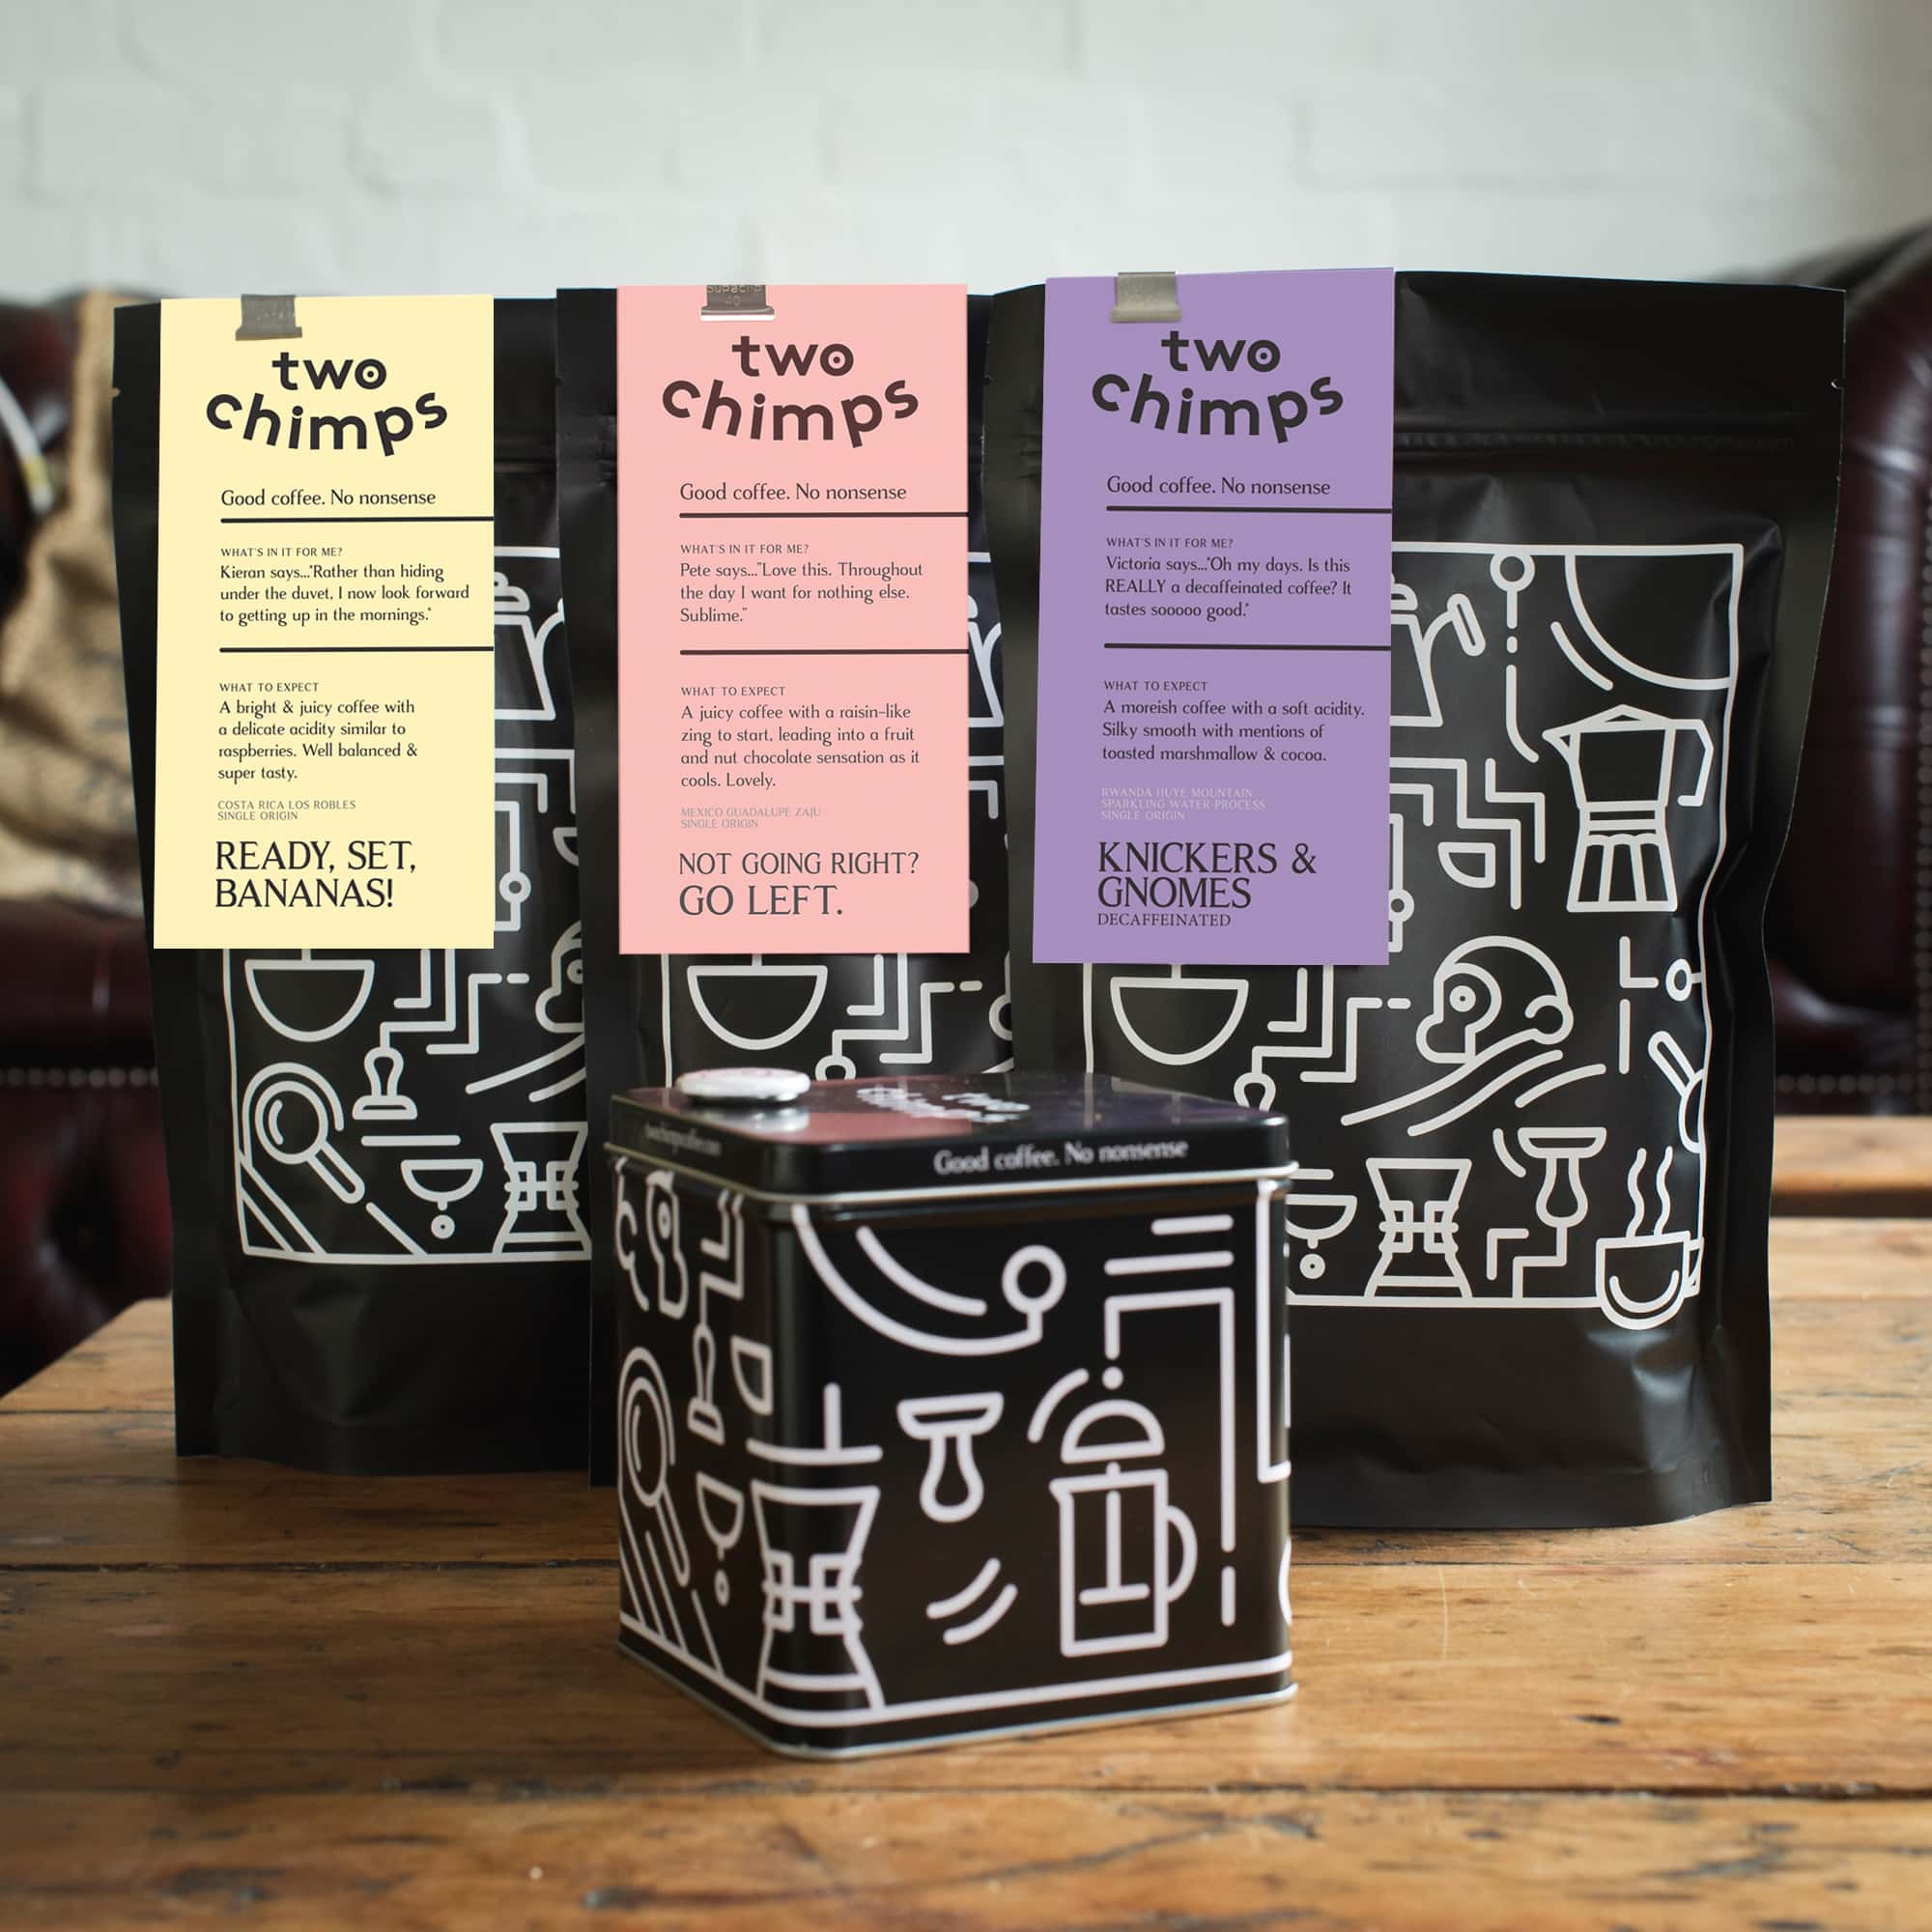 Three two chimps coffee bags